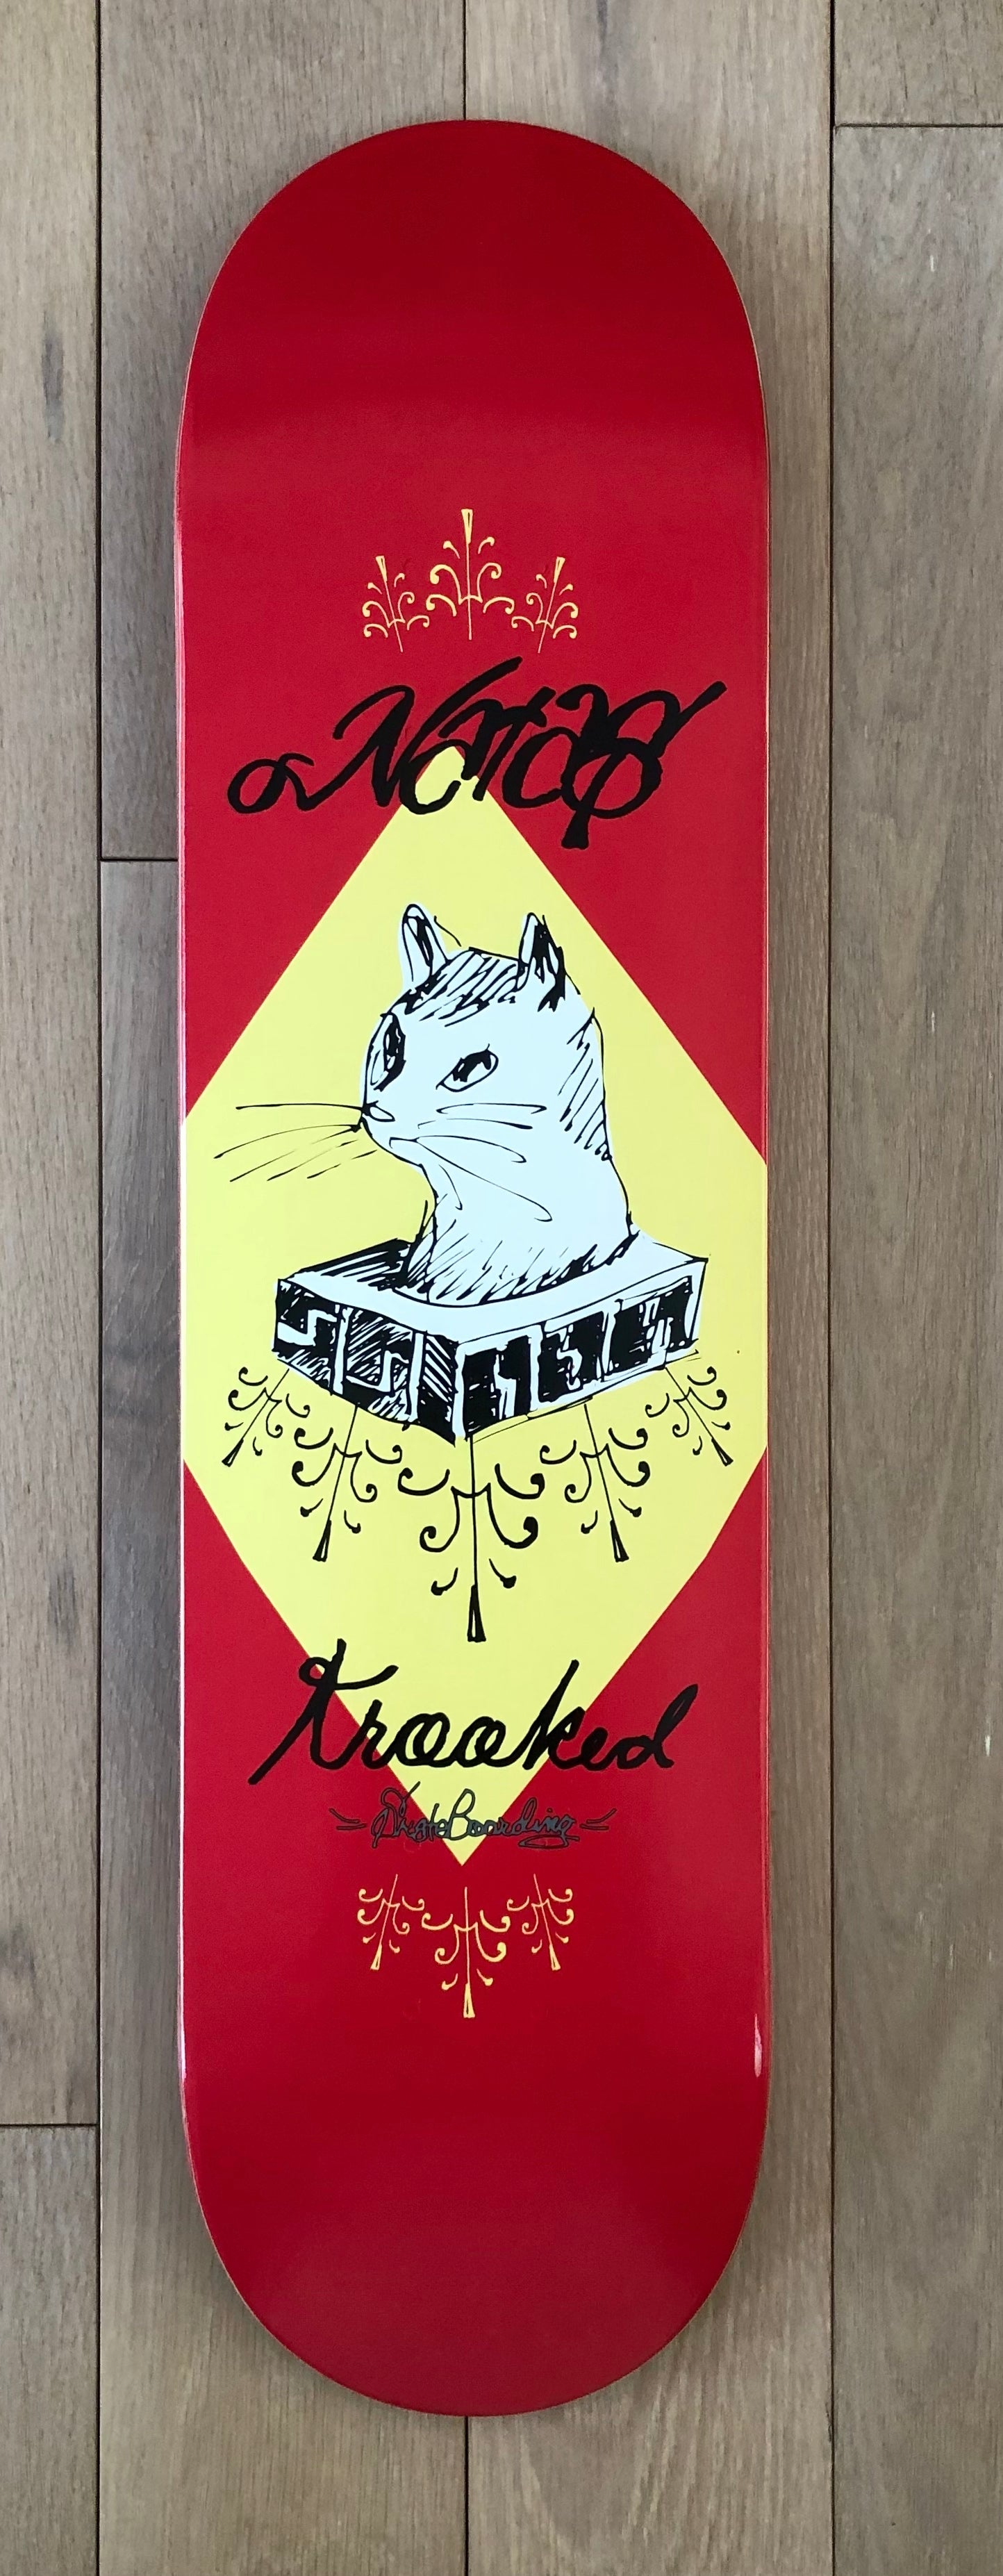 Mark Gonzales x Krooked Skateboards "Natas Kaupas Kitty", 2004